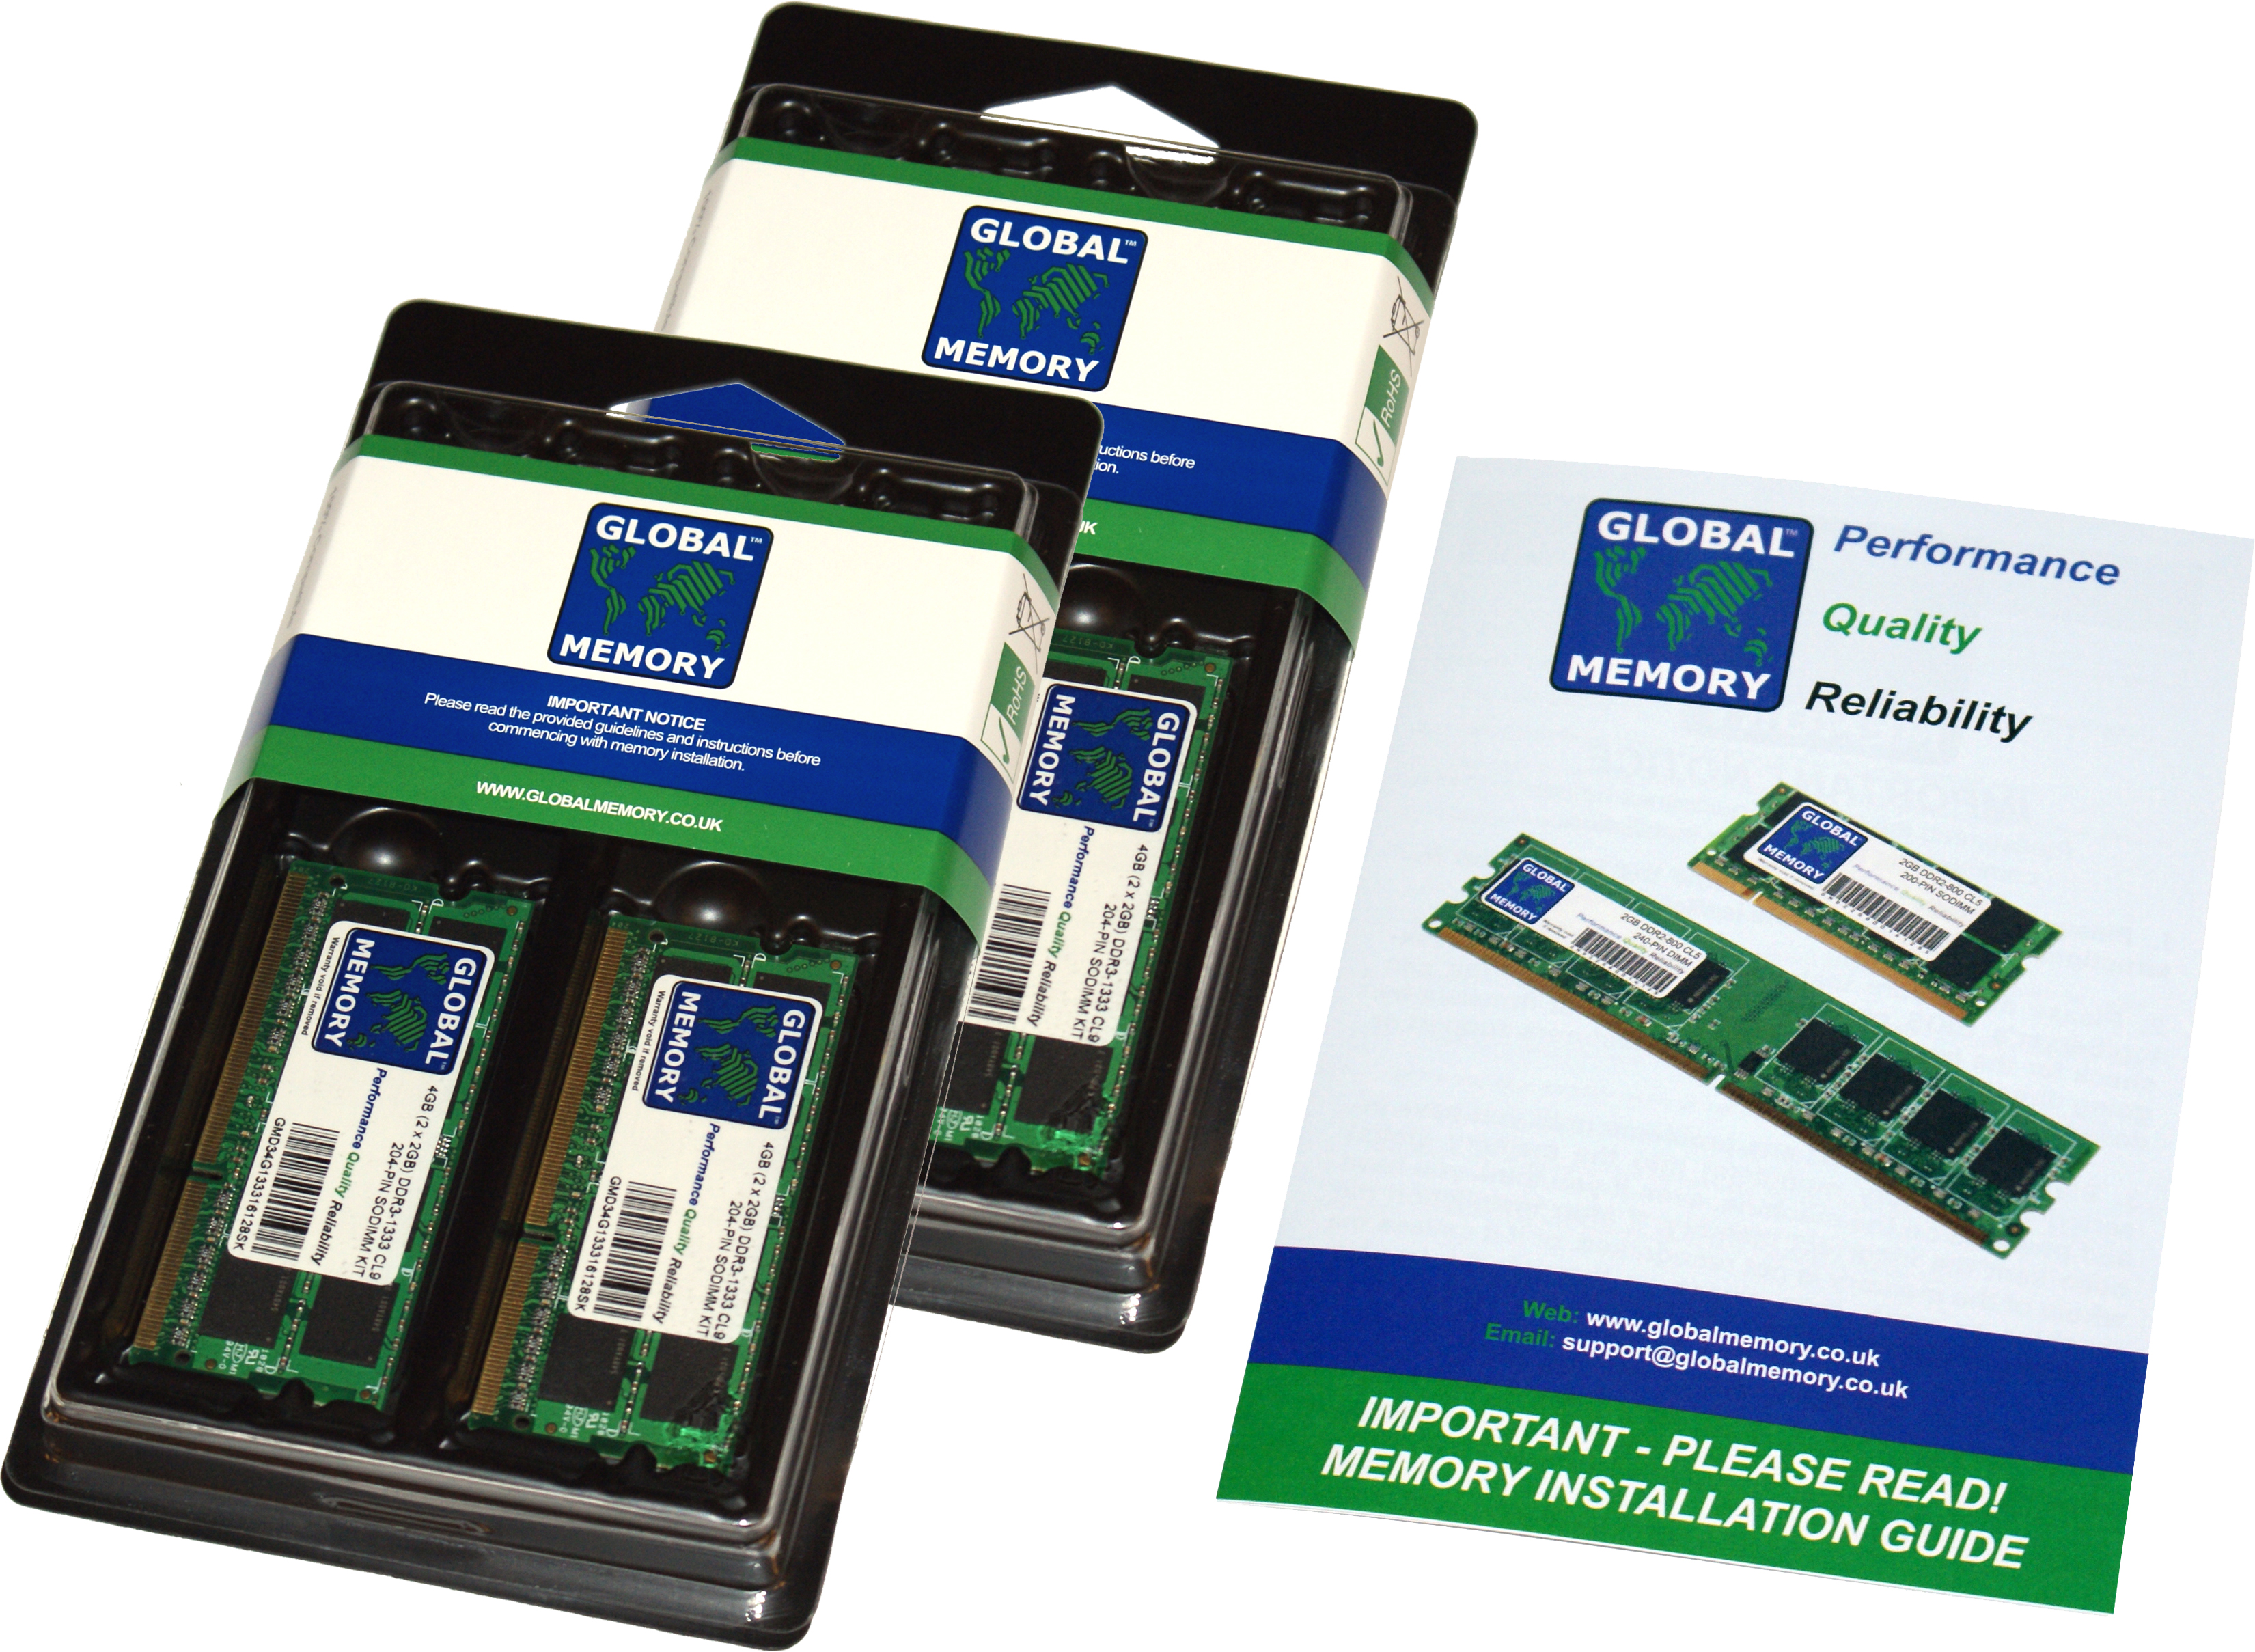 128GB (4 x 32GB) DDR4 2400MHz PC4-19200 260-PIN SODIMM MEMORY RAM KIT FOR SAMSUNG LAPTOPS/NOTEBOOKS